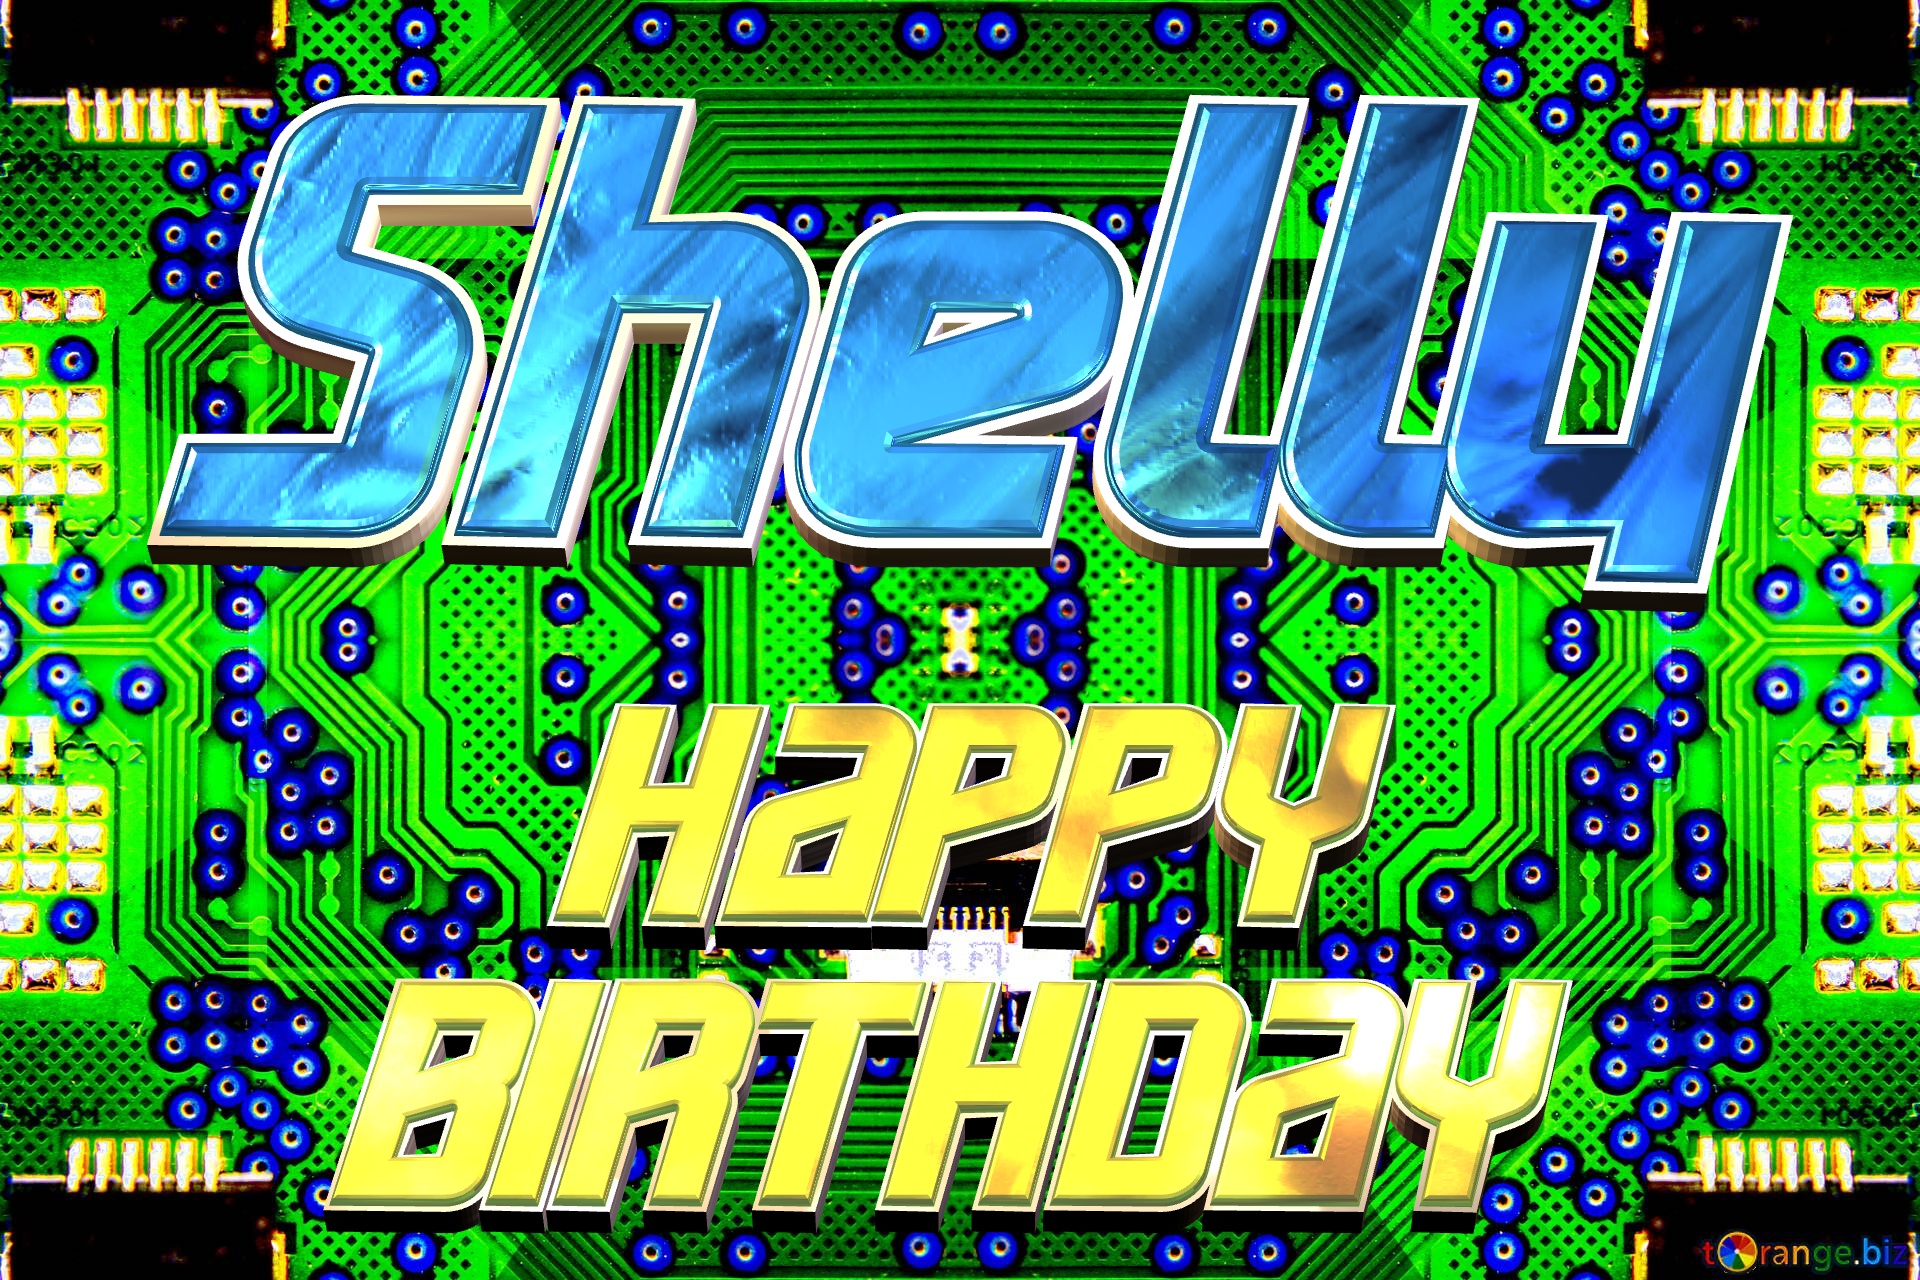   HAPPY BIRTHDAY Shelly  Printed Circuit Board PCB Design №0